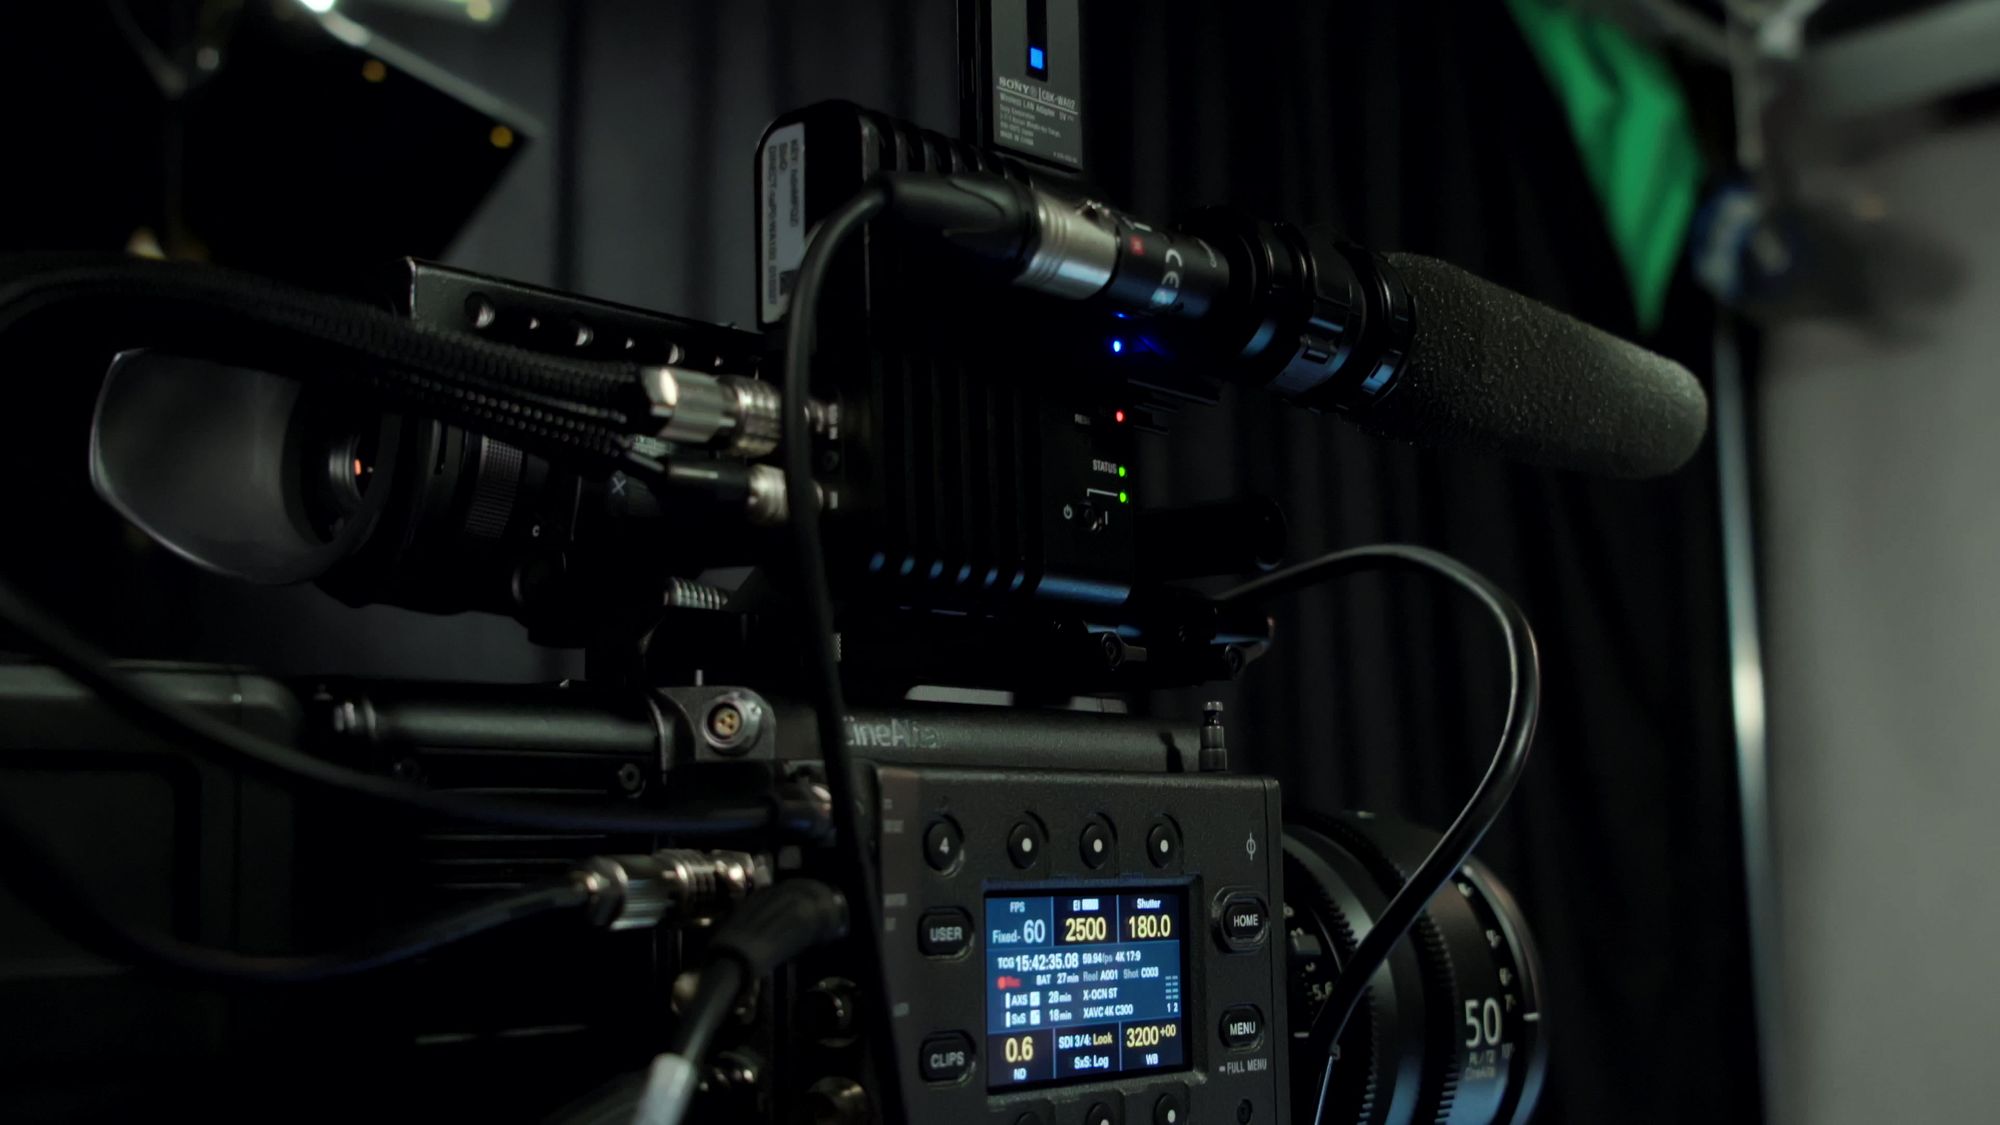 Closeup of Sony cinema camera and equipment